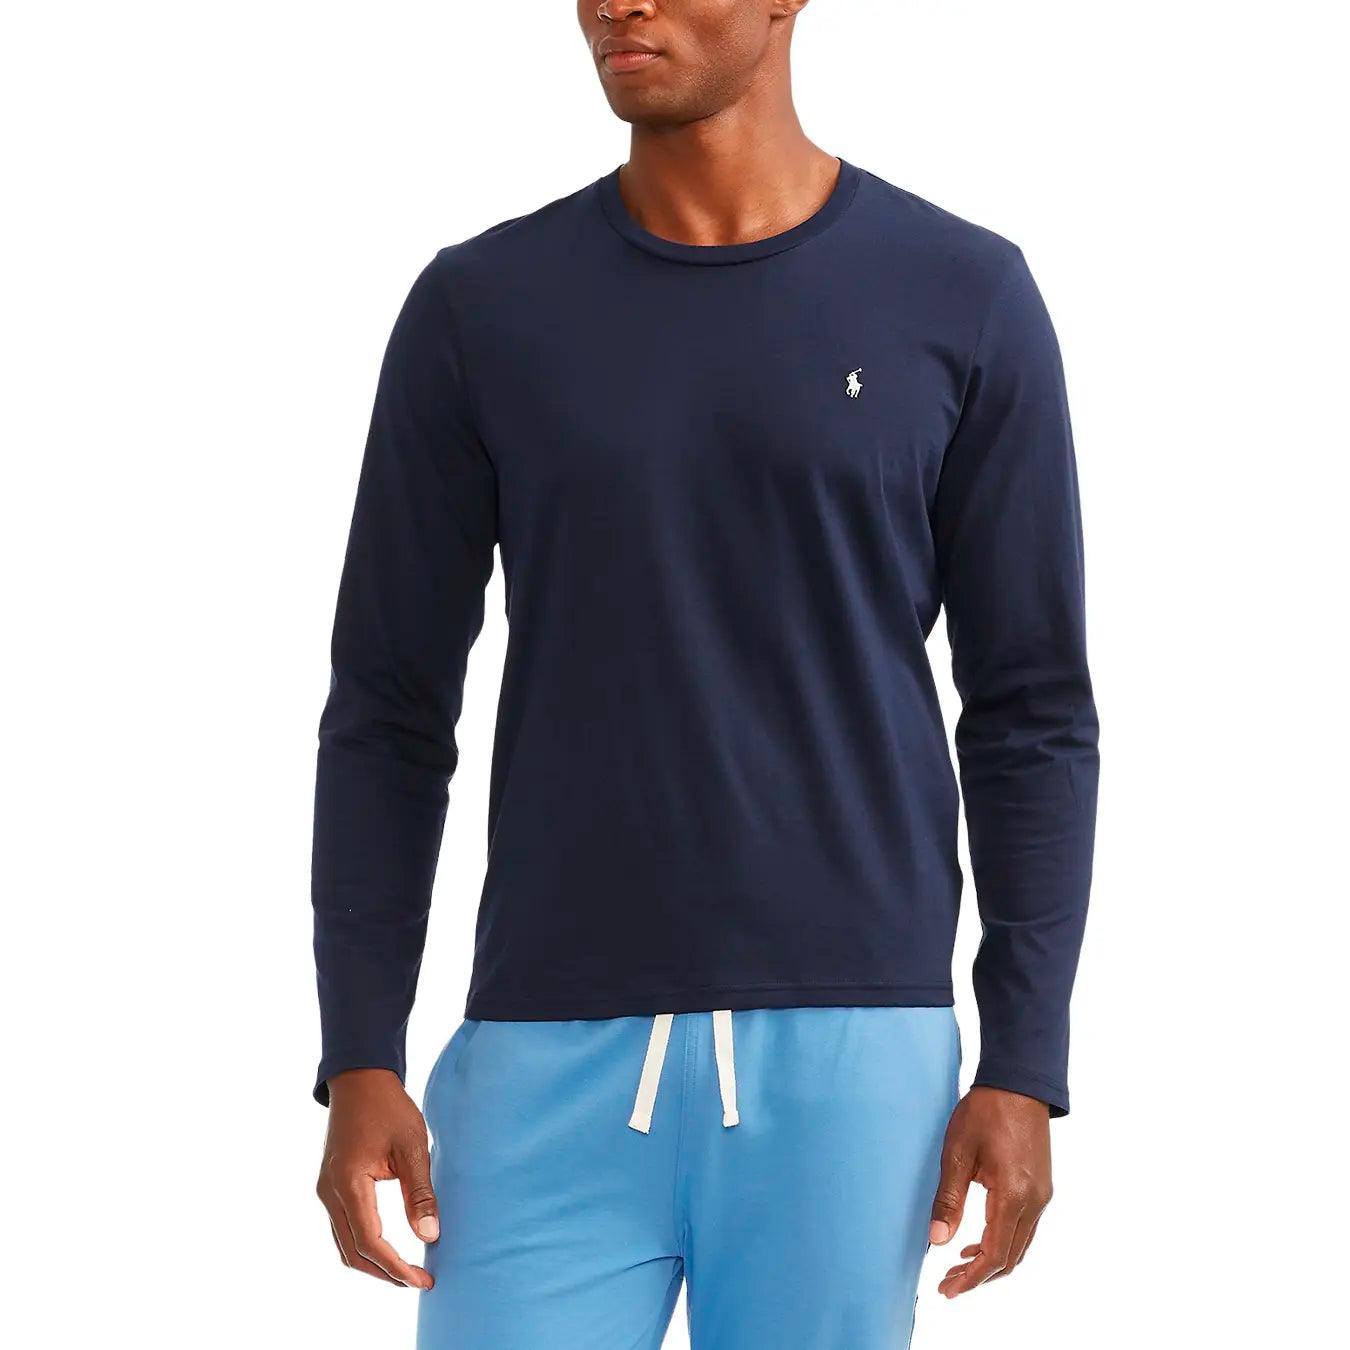 Polo Ralph Lauren t Shirt ml, 714844759, l/s Crew Sleep Top, 002 blu Cruise, Bassiniboutique.it,&#x20;